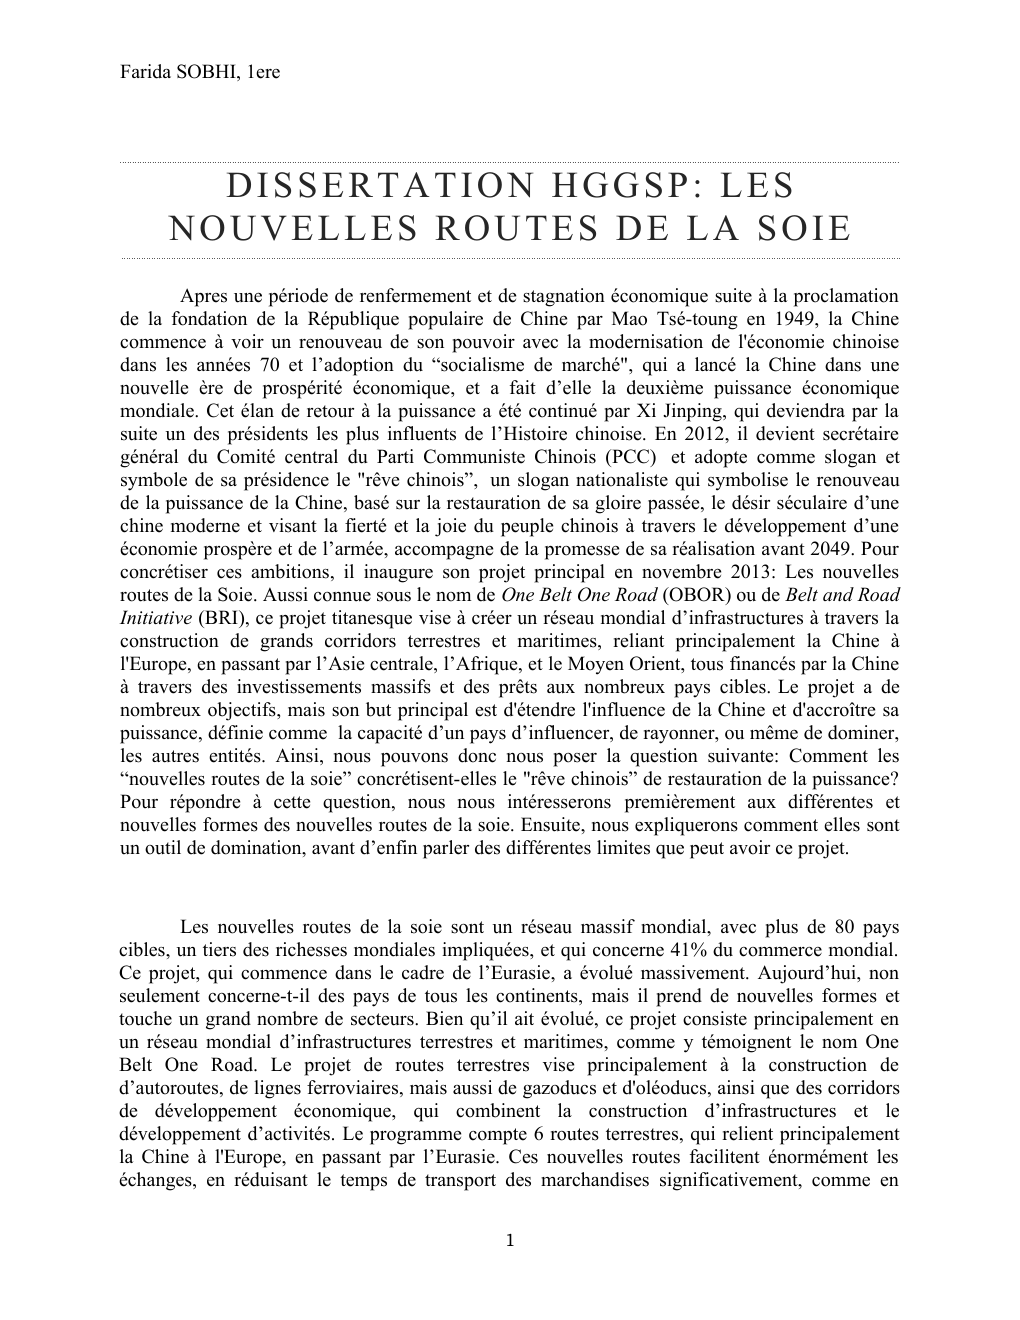 la dissertation hggsp